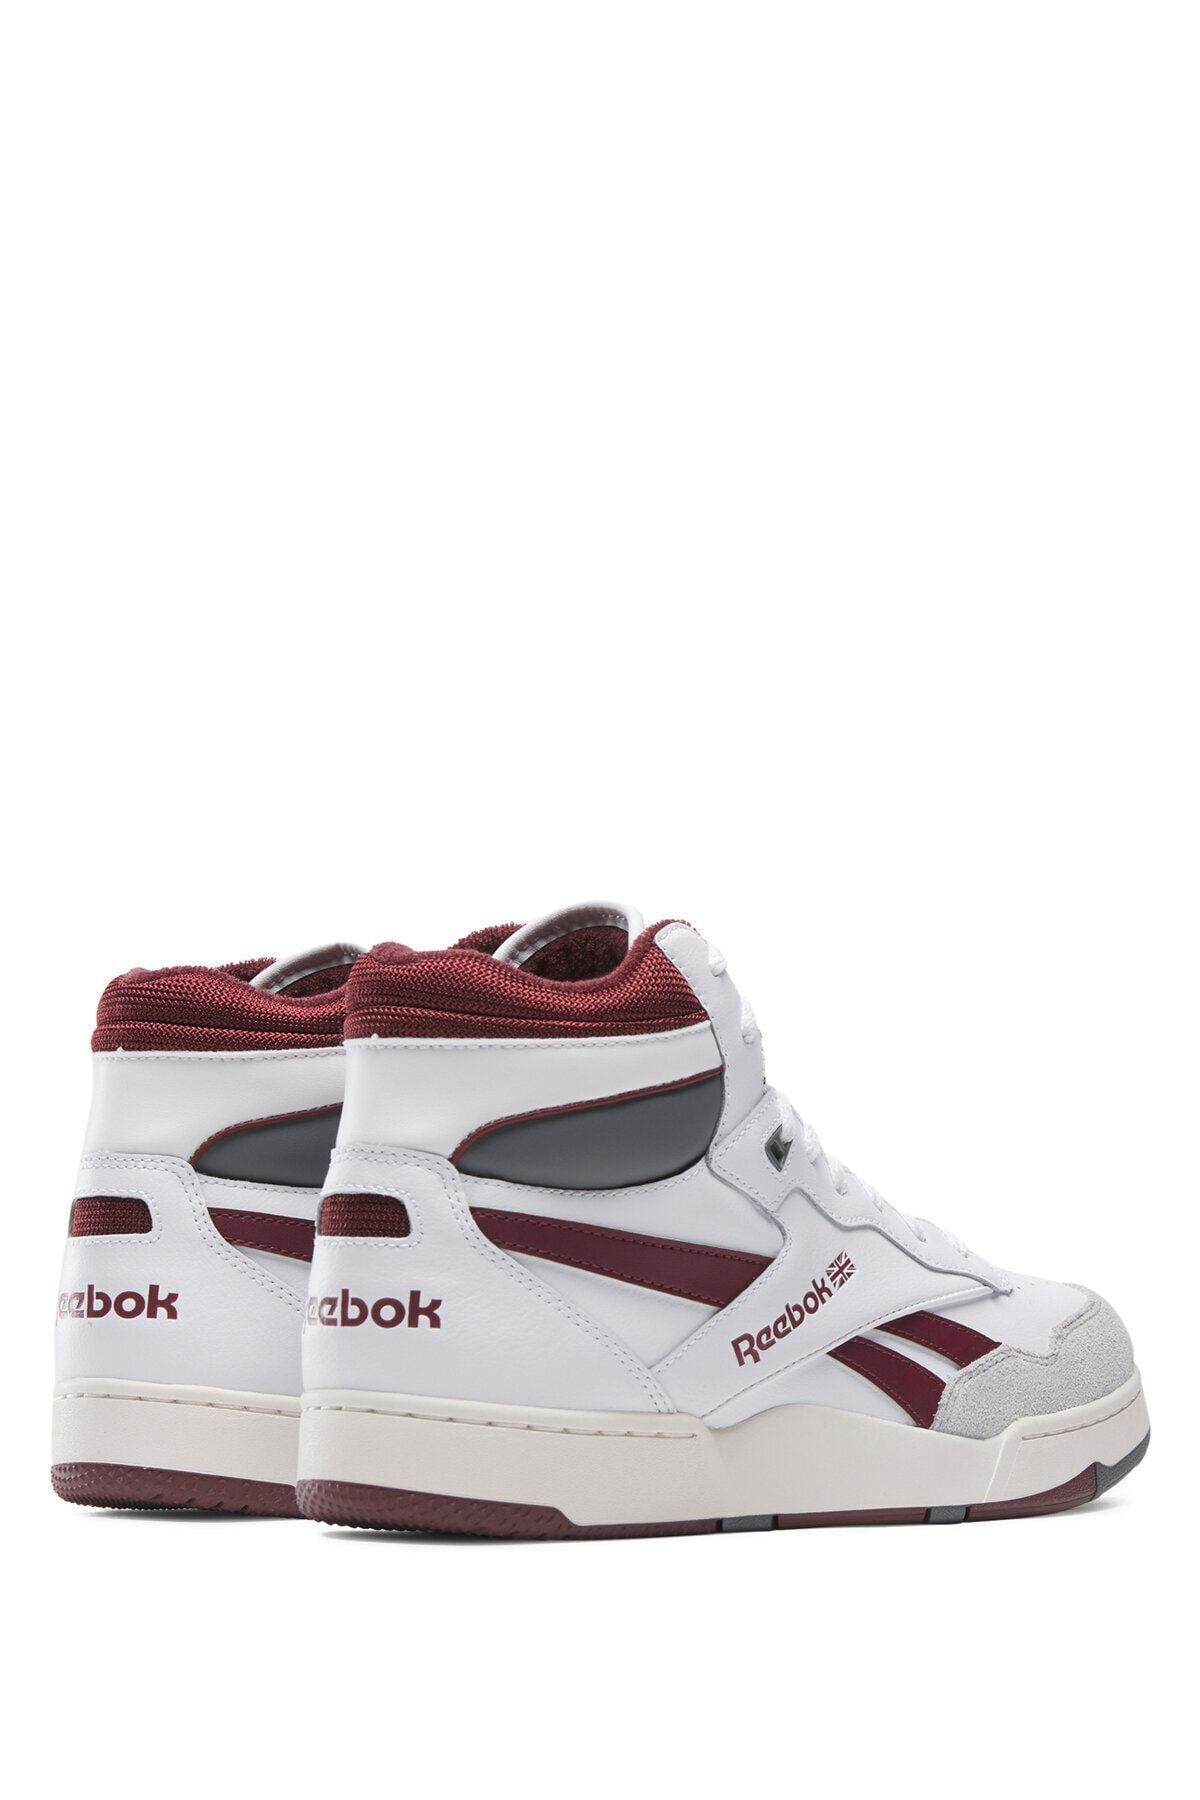 Reebok BB 4000 II کفش ورزشی سفید یونیسکس - 100033844